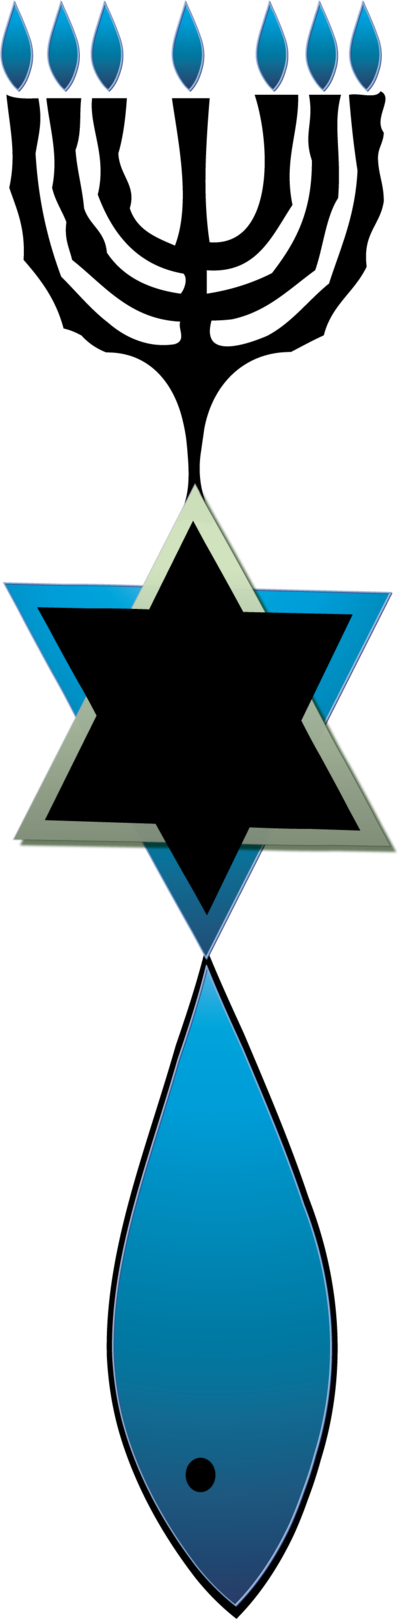 Messianic Christian Jew Art 19 By Madetobeunique - Messianic Jewish Symbol (400x1619)